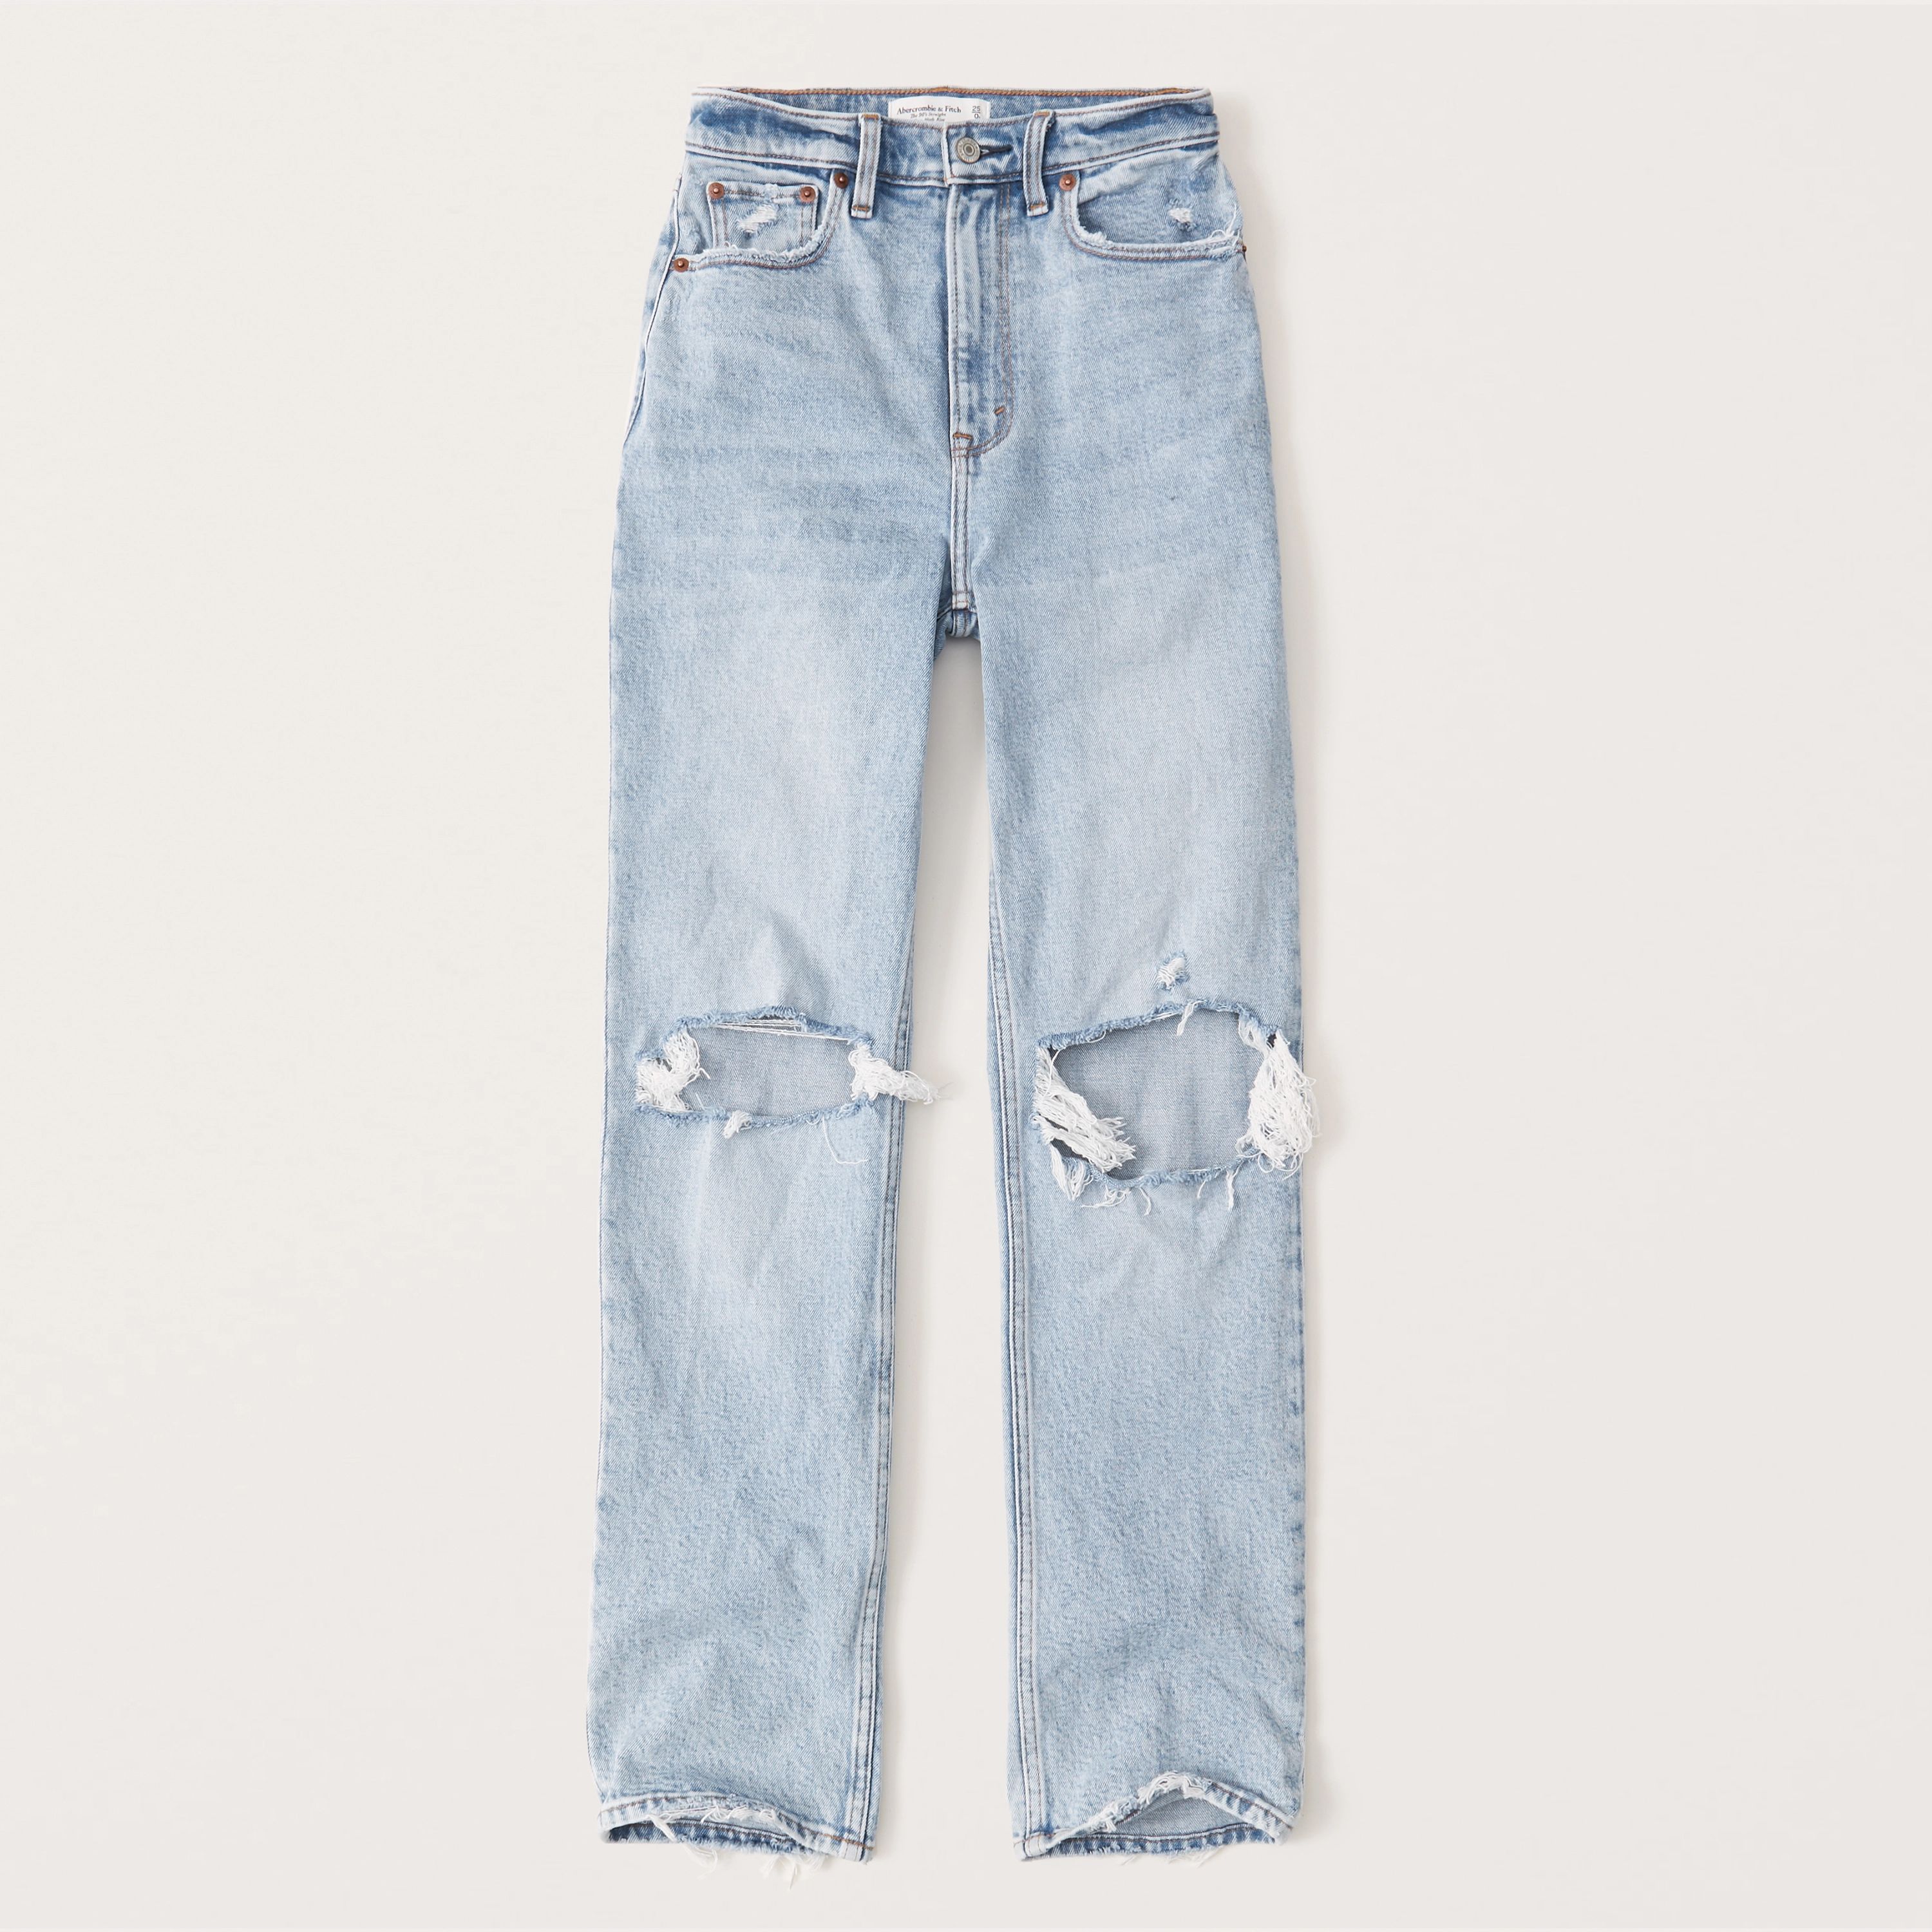 A&F Signature Stretch Denim
			


  
						
							'90s Ultra High Rise Straight Jeans
						
			... | Abercrombie & Fitch (US)